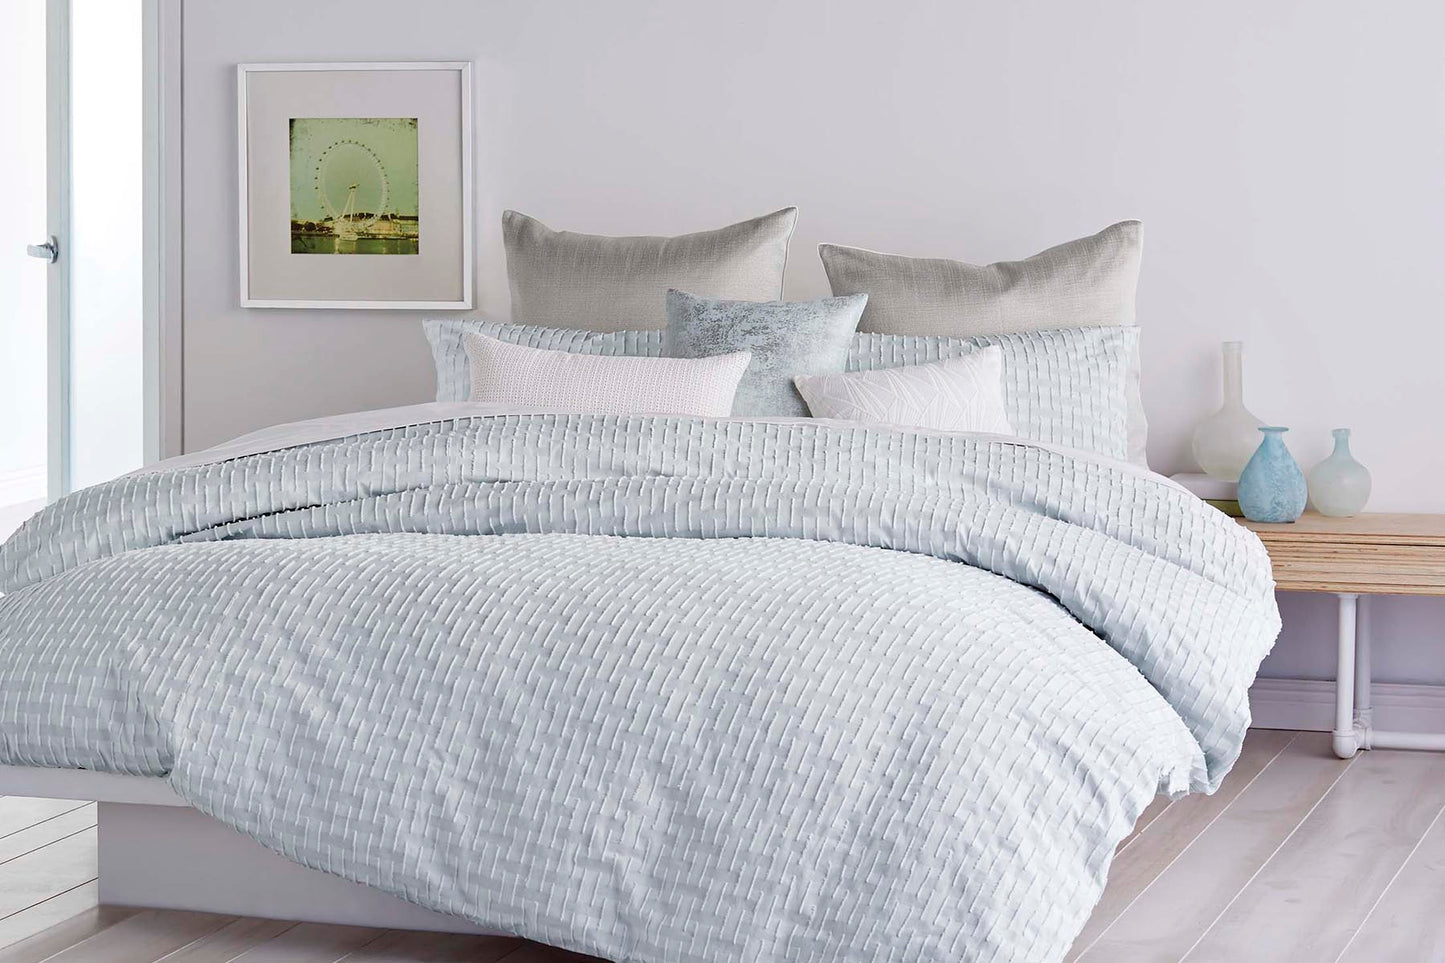 DKNY Refresh 11"x22" Decorative Pillow